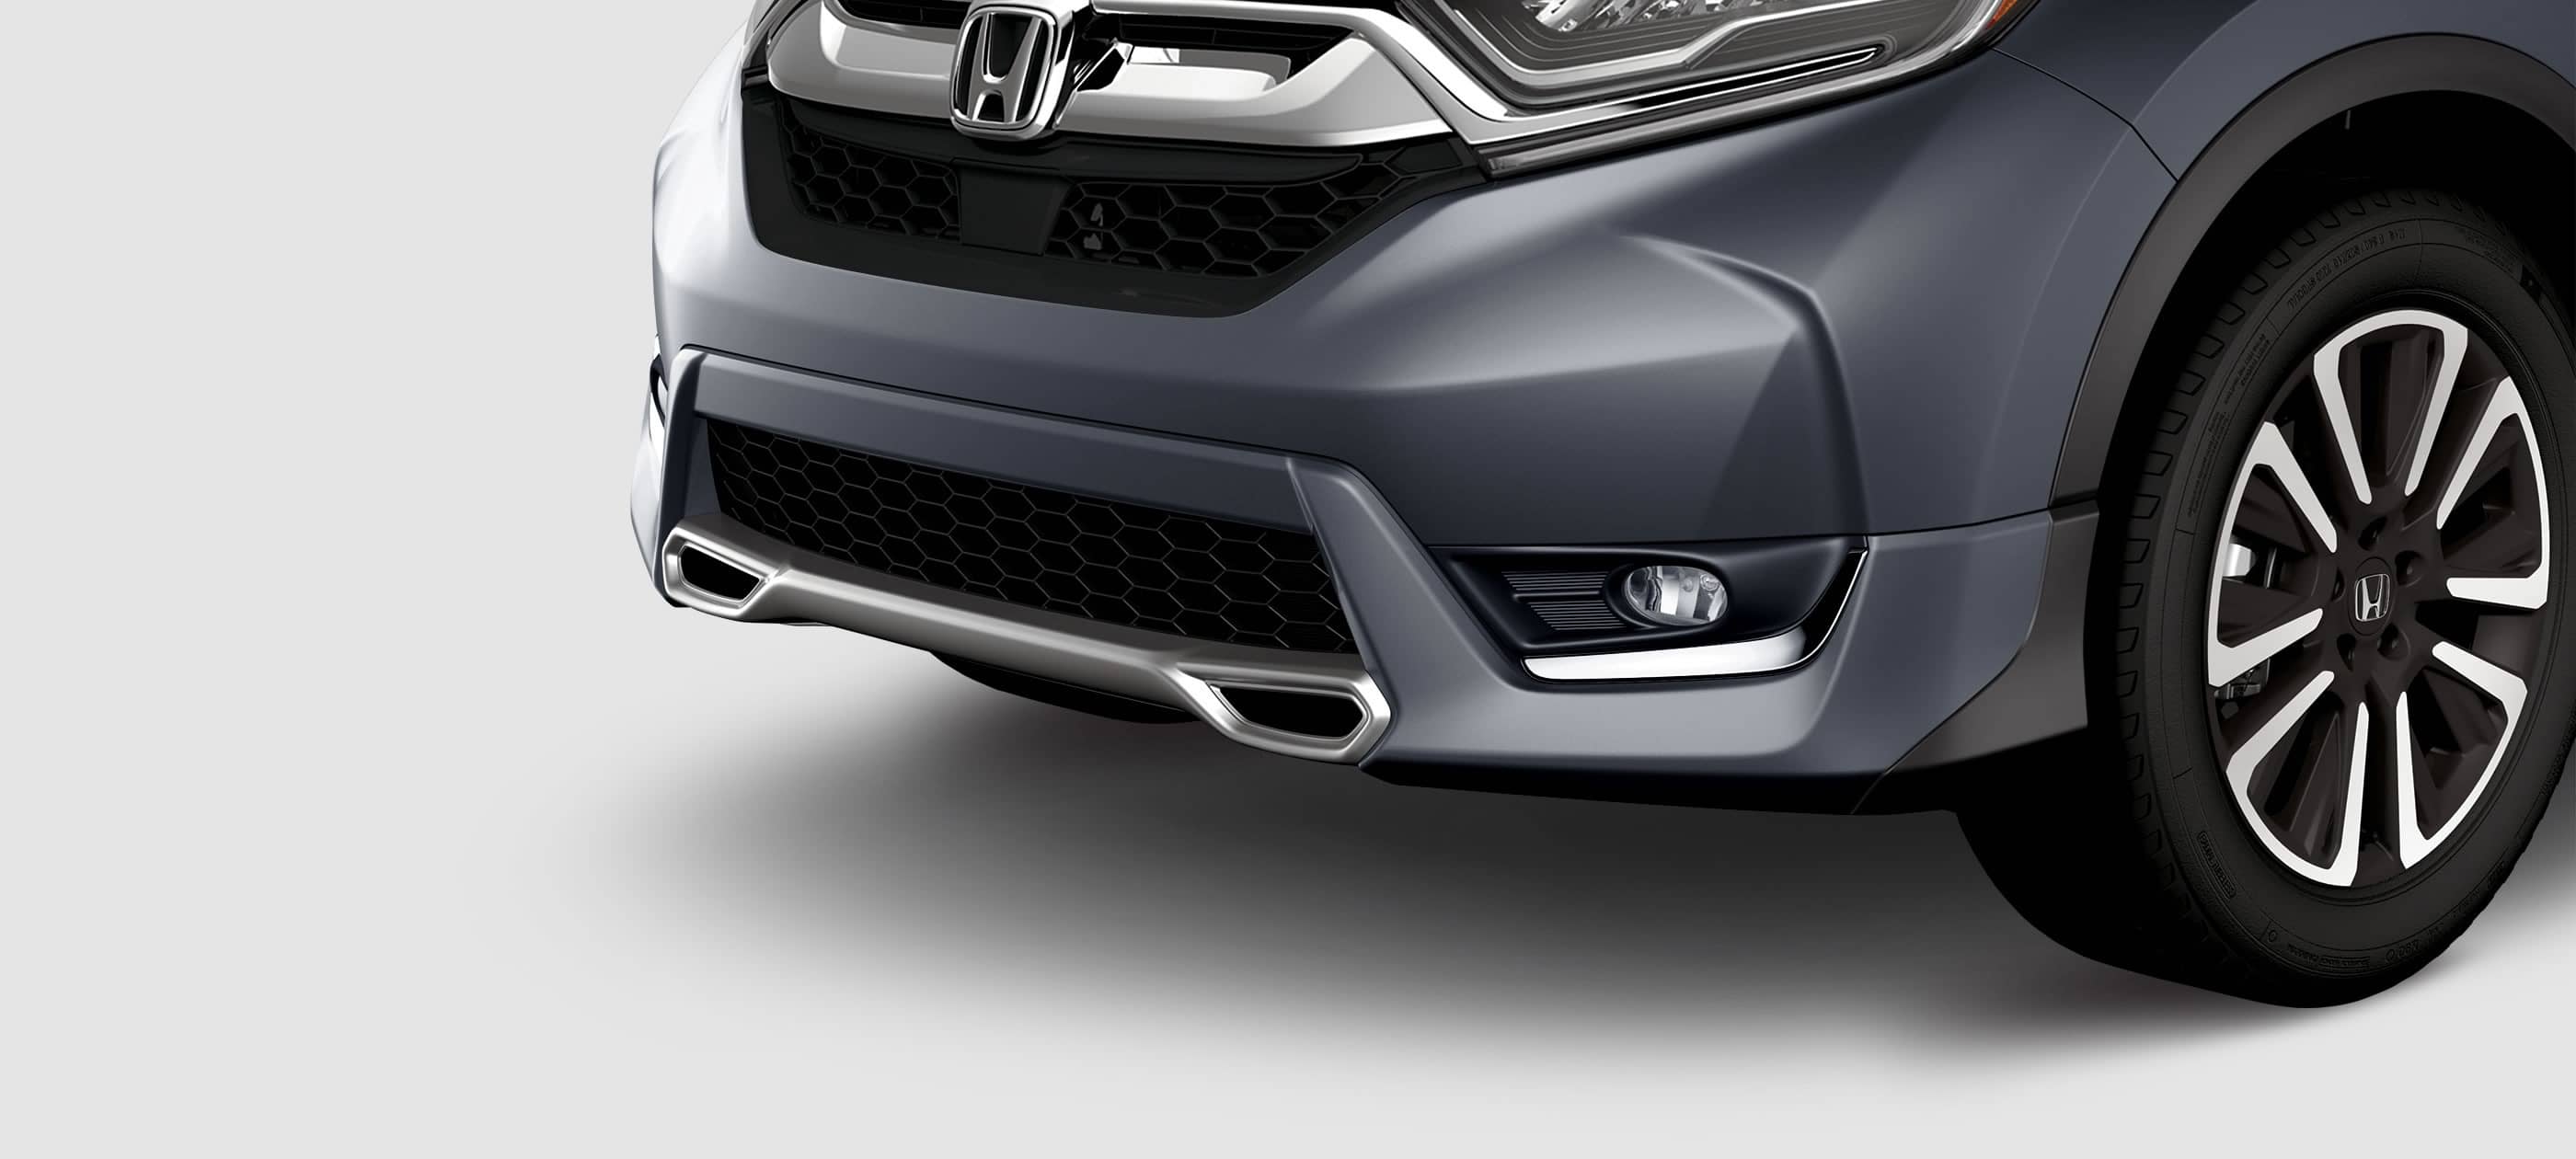 Honda CR-V Front Sport Bumper